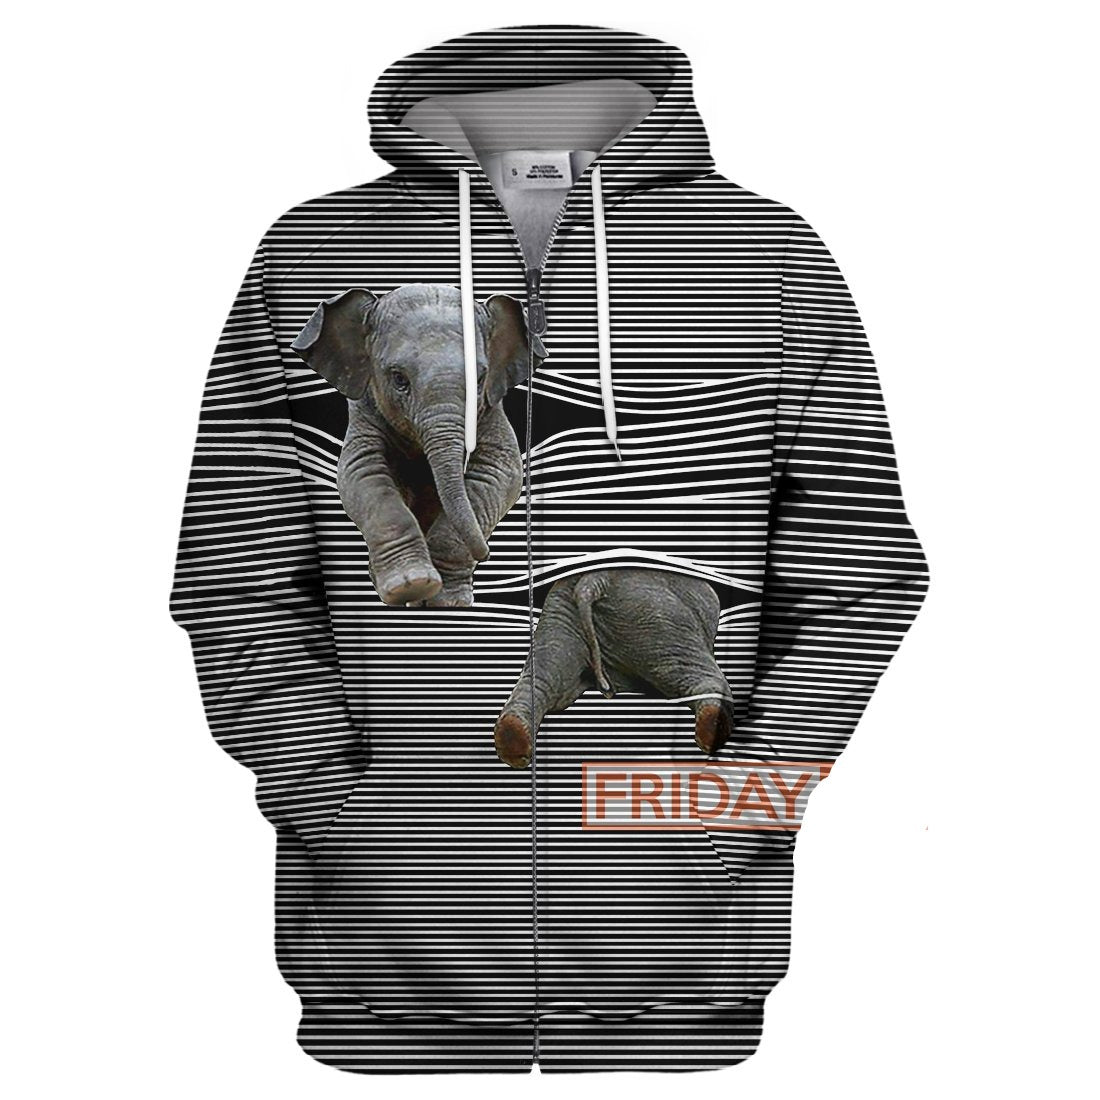 Unifinz Elephant T-shirt Funny Elephant 3D Print T-shirt Amazing Elephant Hoodie Sweater Tank 2026